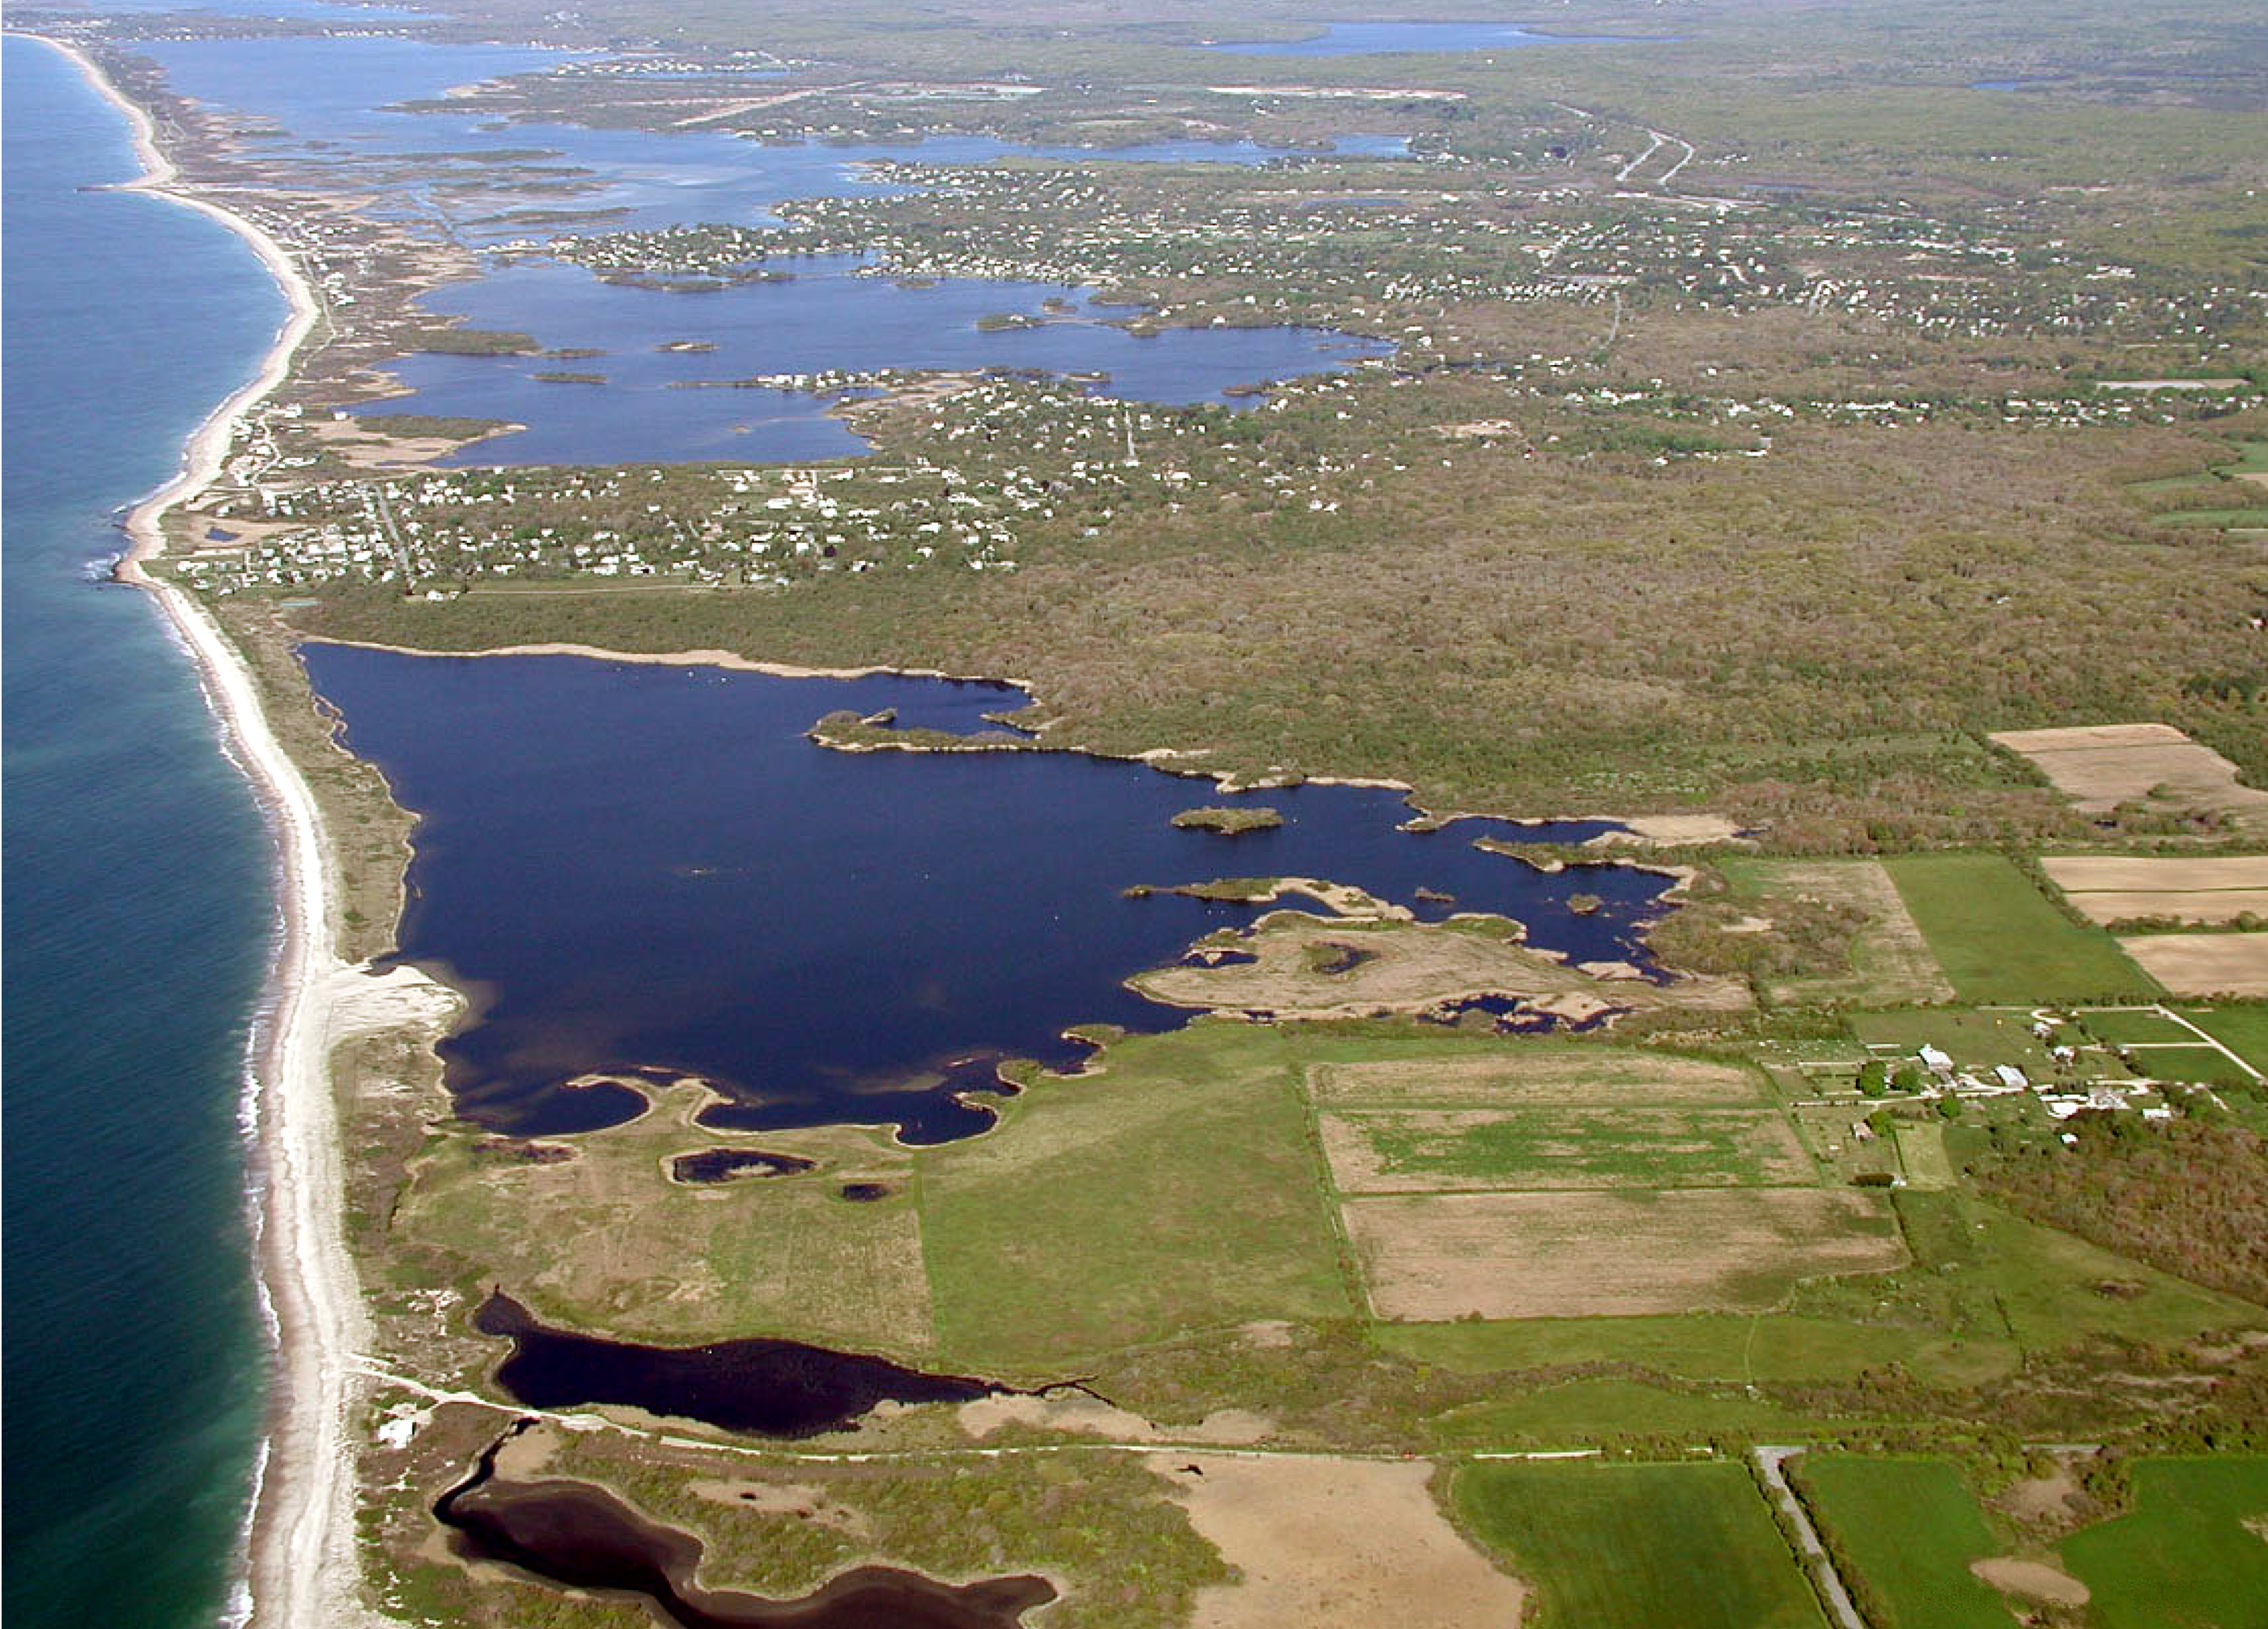 Aerial view of Trustom Pond